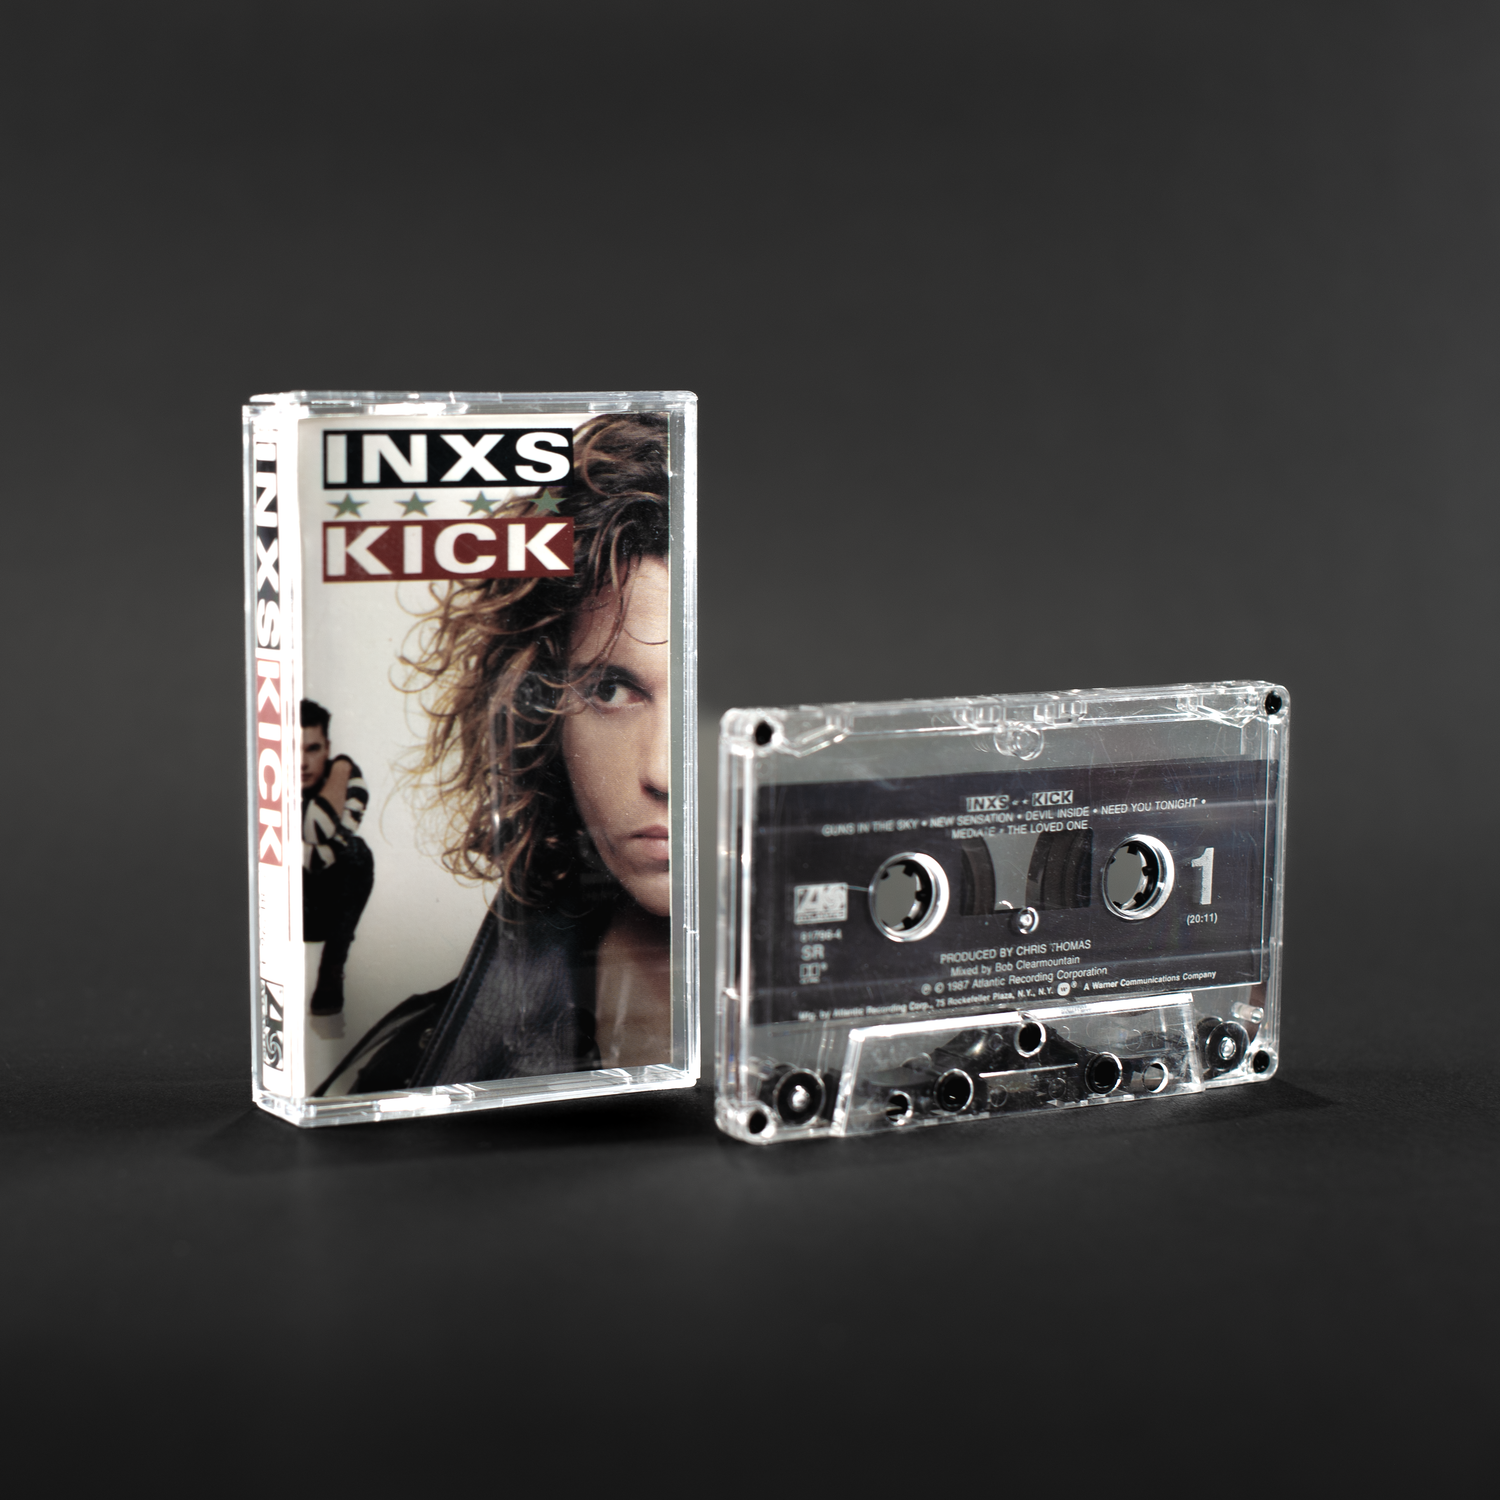 INXS - Kick - Vintage Cassette